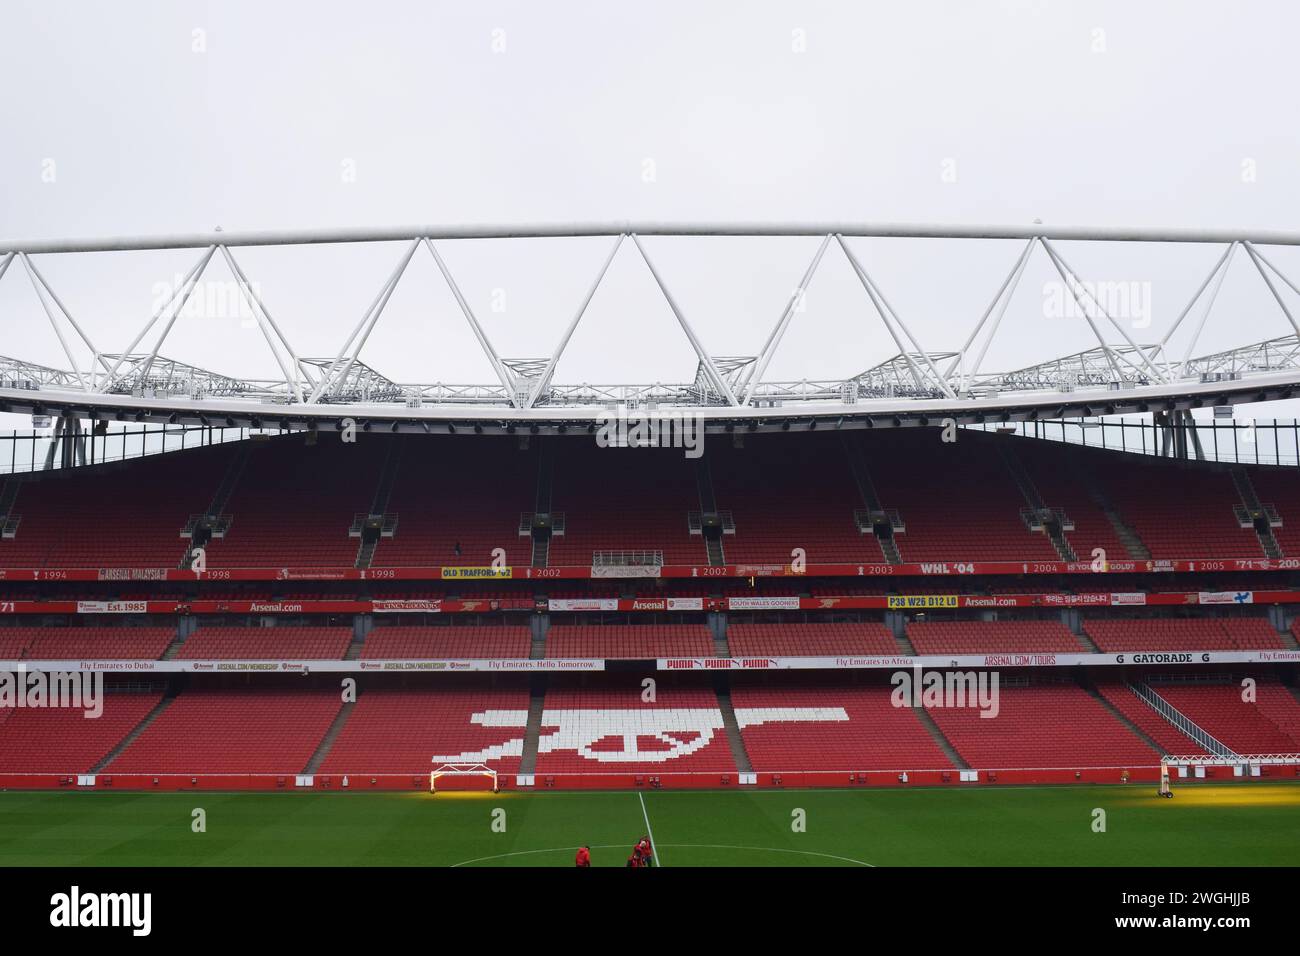 Emirates Stadium of the Arsenal London team, in England on October 25, 2017 Stock Photo